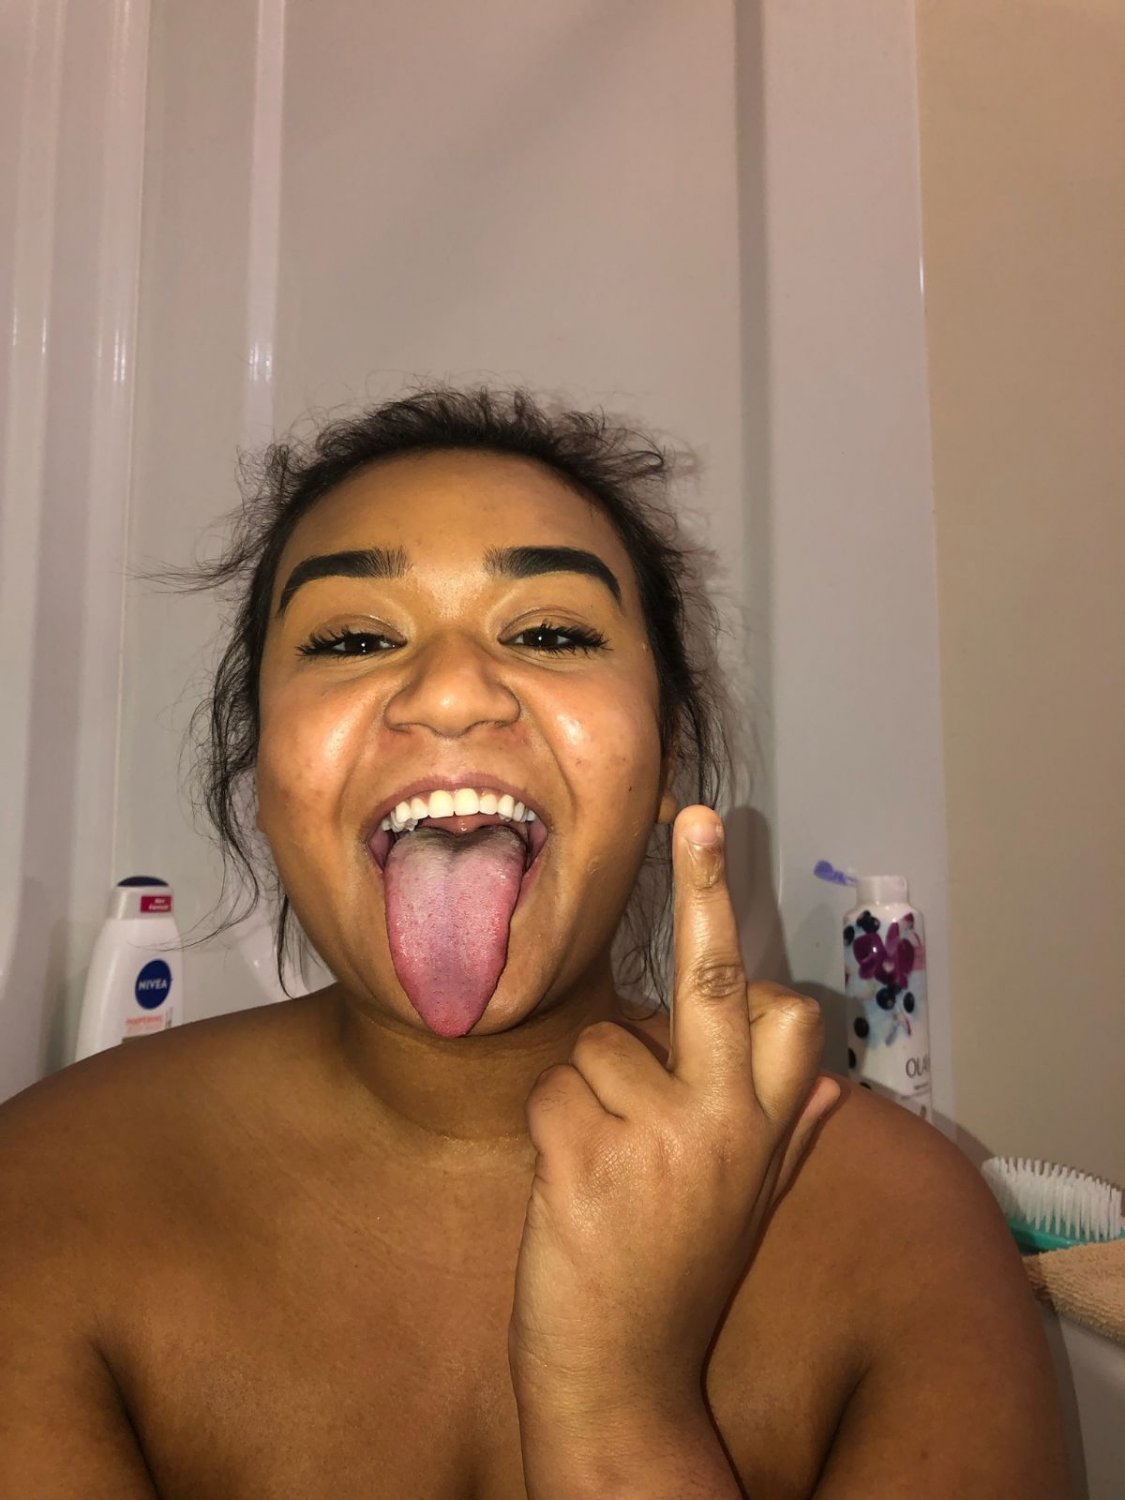 Asian Slut Facials - Brown Asian Slut with a Toothbrush Up her Ass - Porn - EroMe